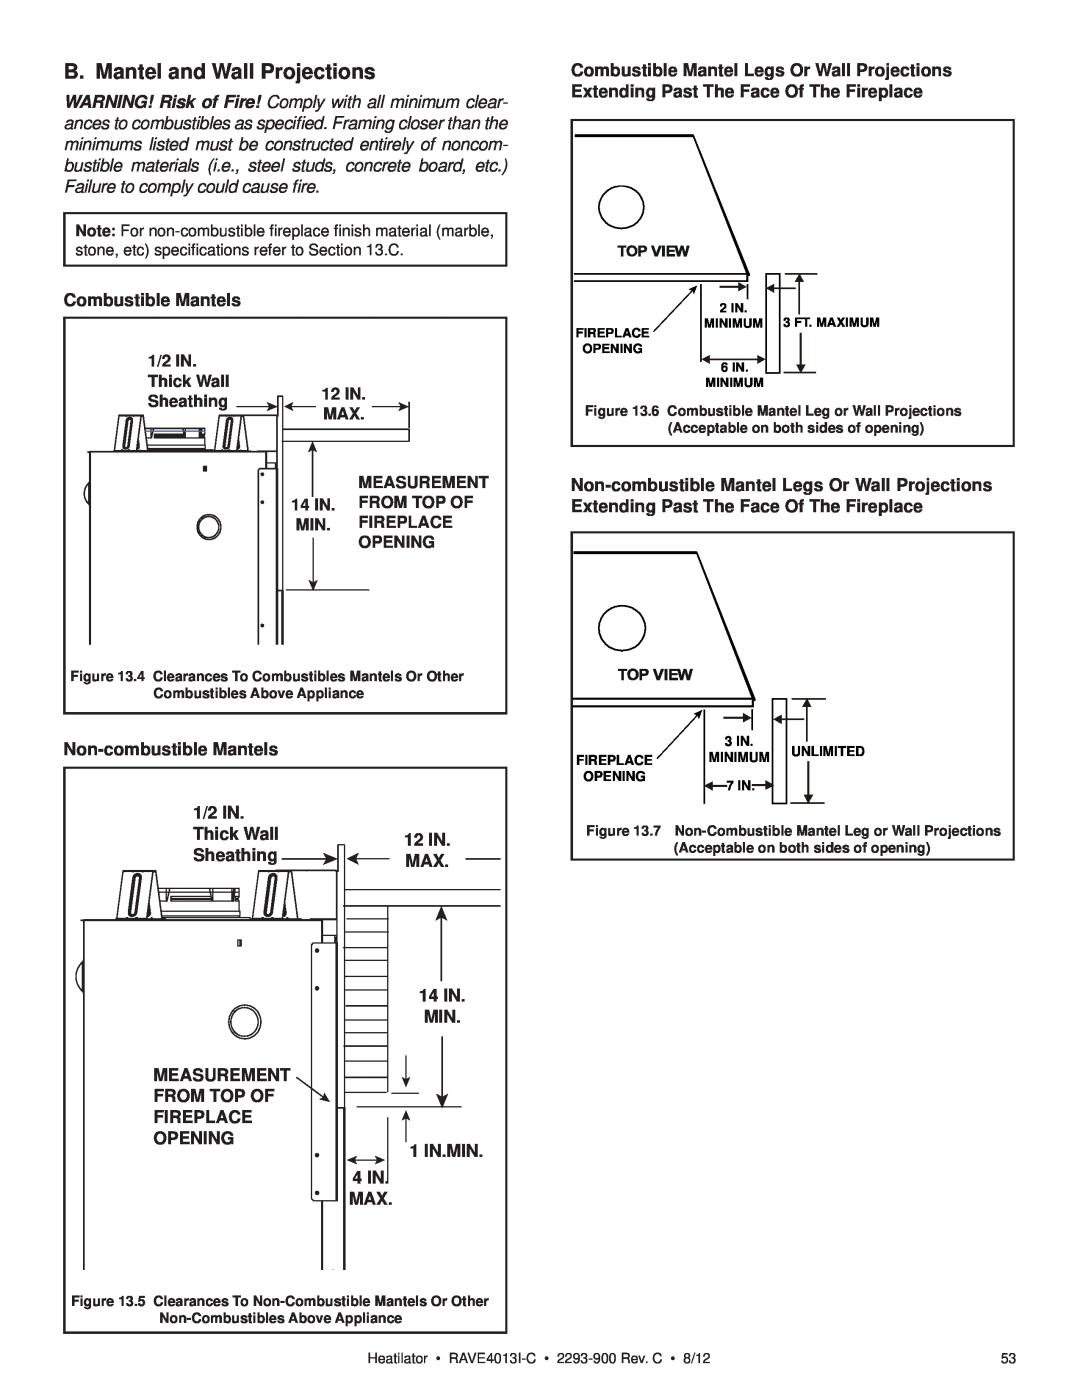 Heatiator Rave4013i-c owner manual B. Mantel and Wall Projections, Heatilator • RAVE4013I-C• 2293-900Rev. C • 8/12 